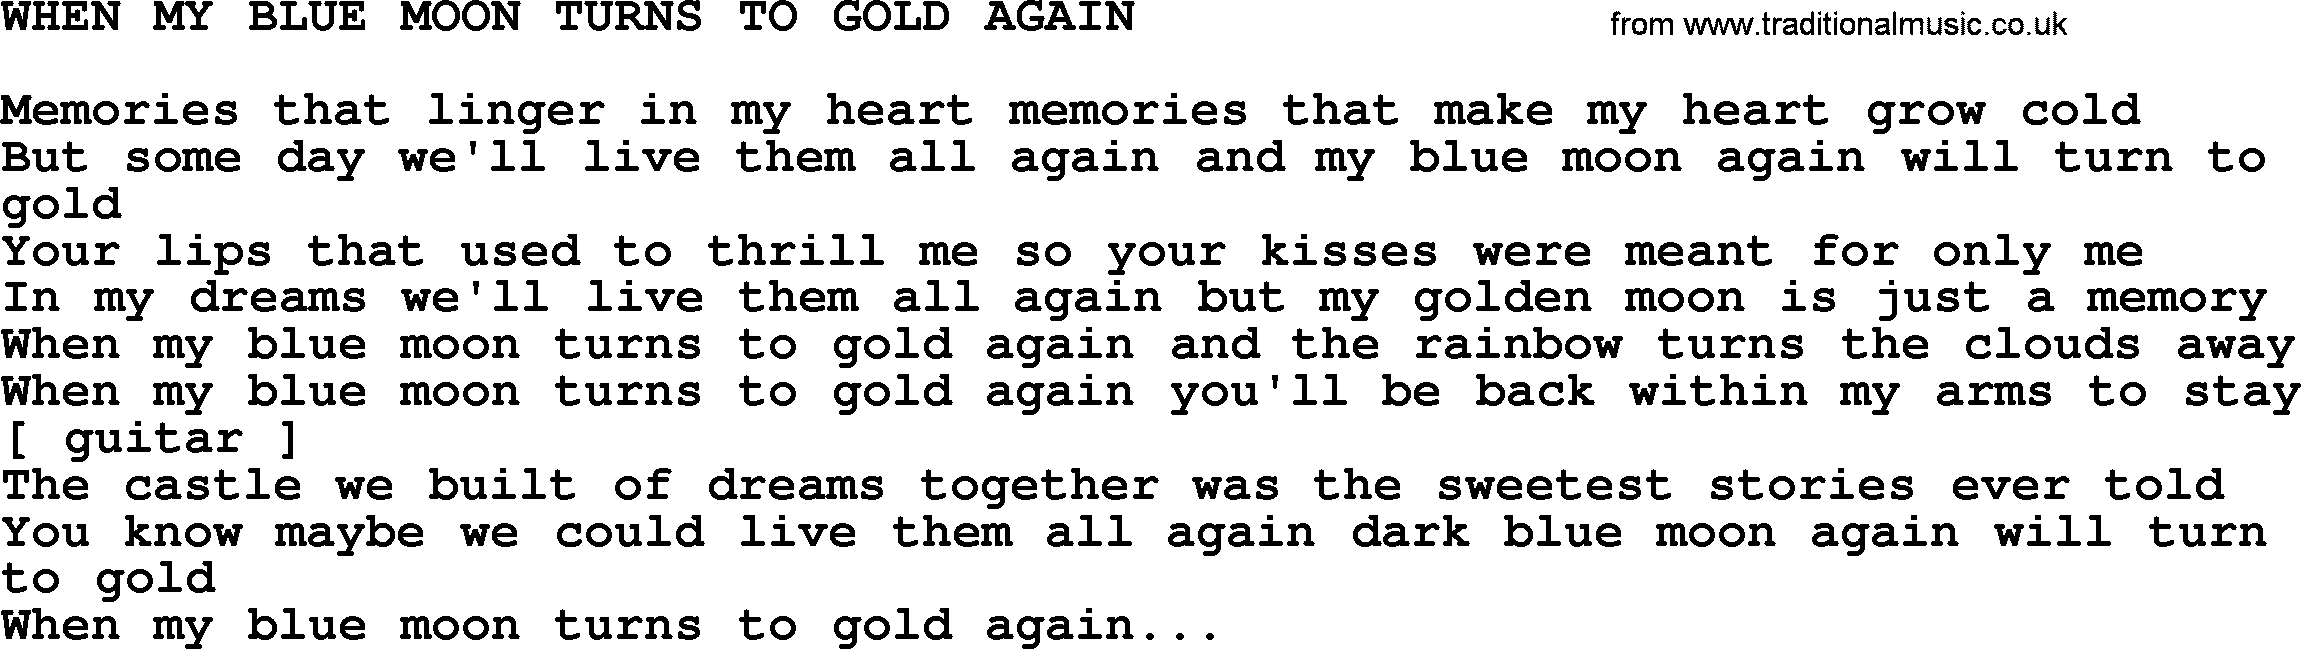 Merle Haggard song: When My Blue Moon Turns To Gold Again, lyrics.